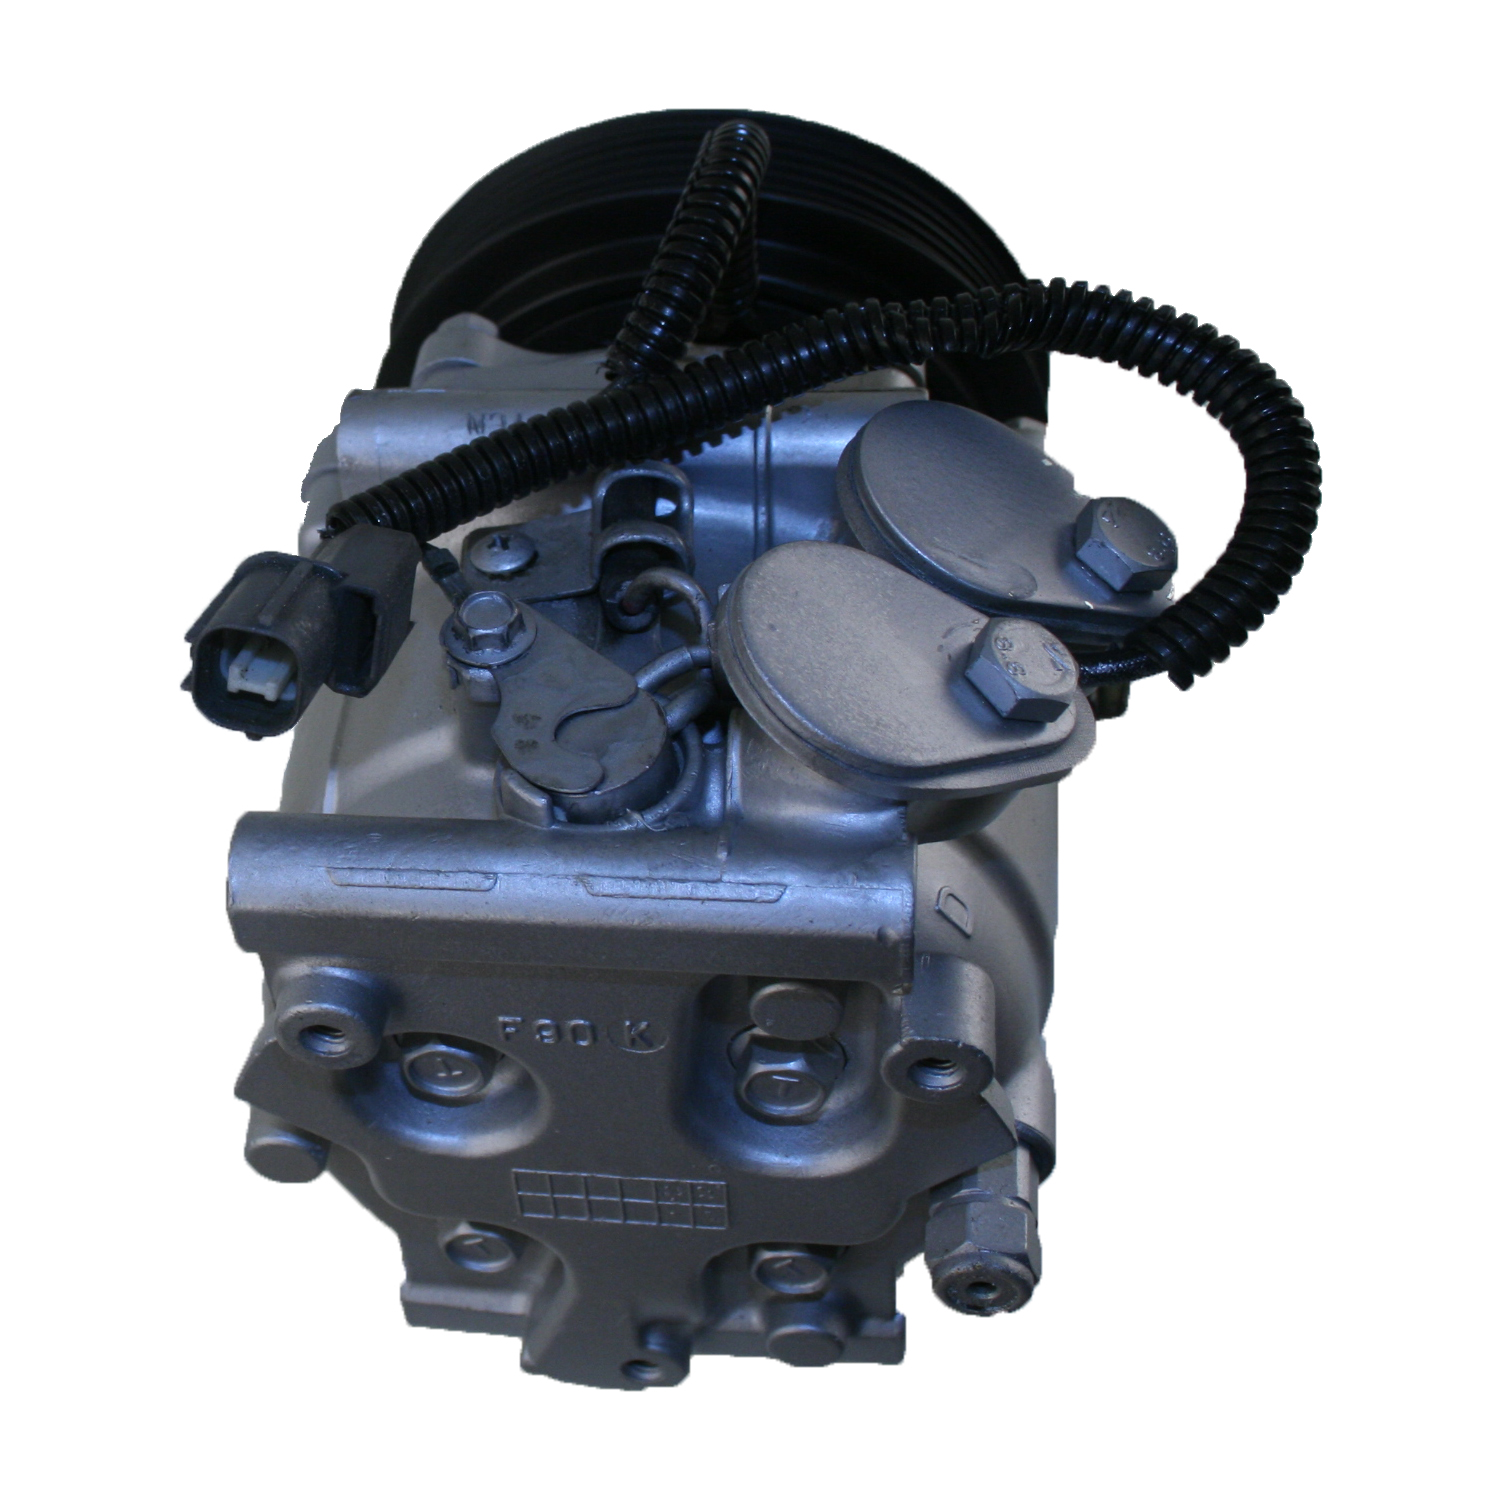 TCW Compressor 40842.501 Remanufactured Product Image field_60b6a13a6e67c